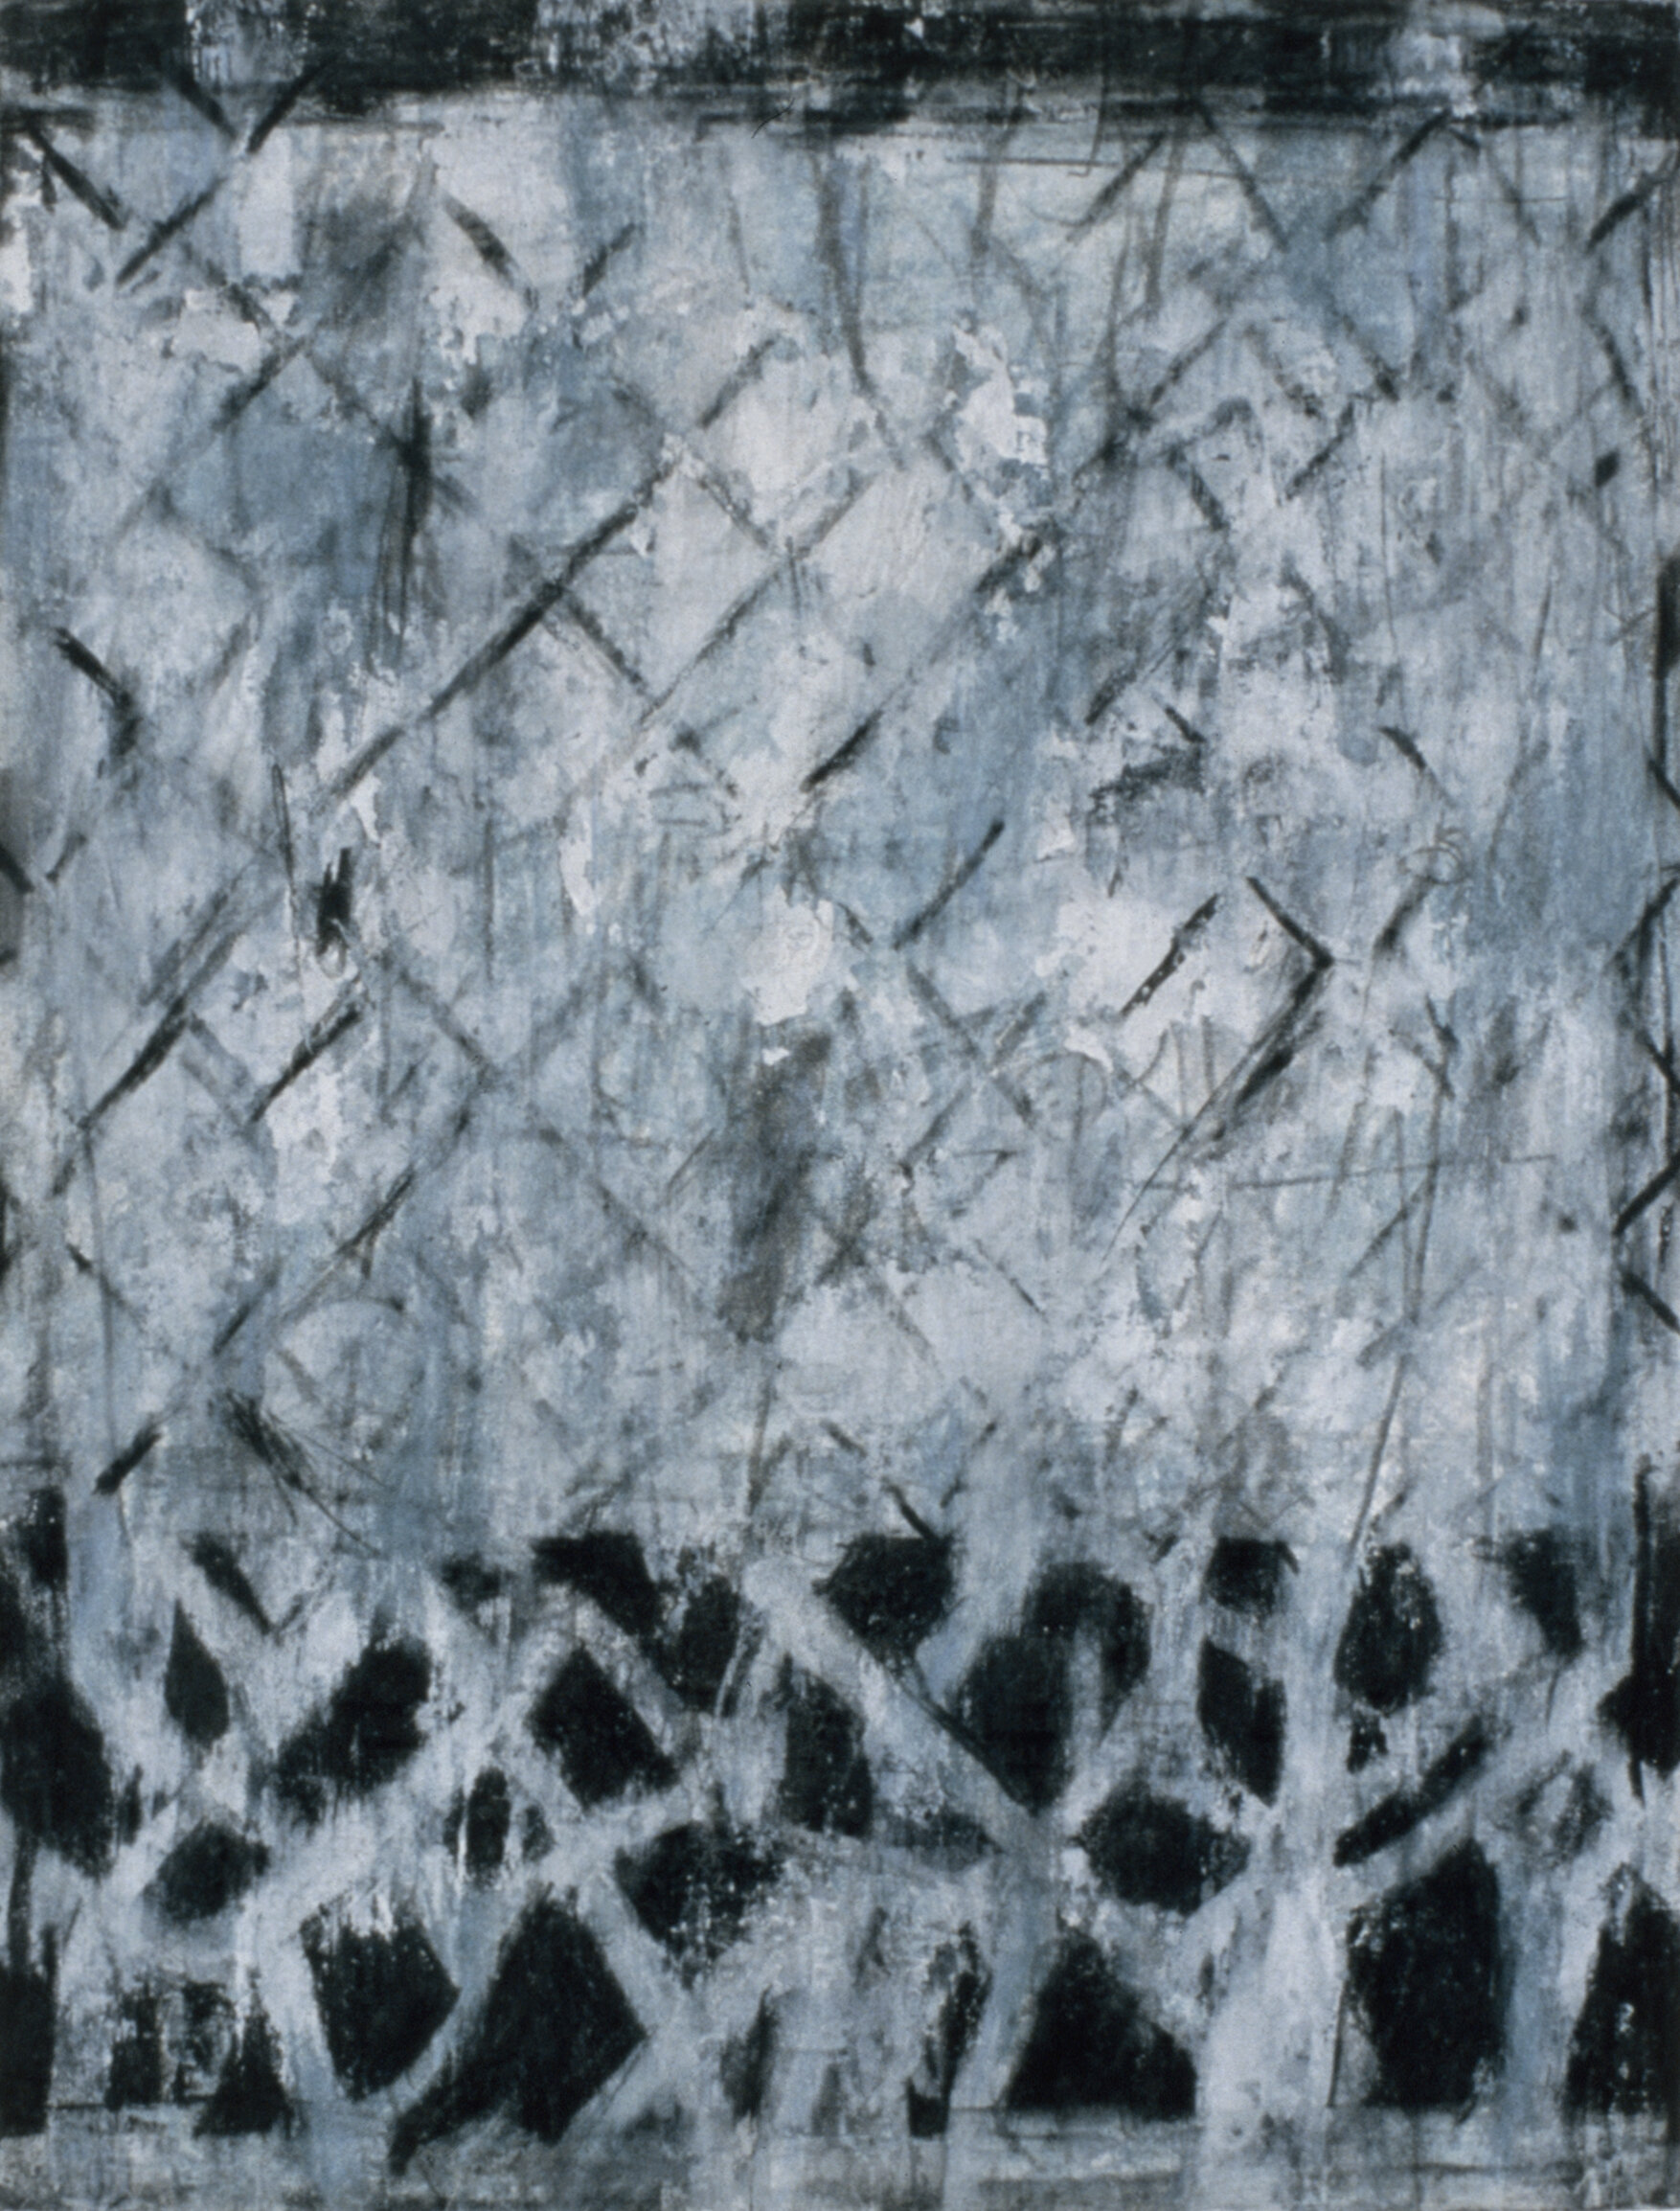   Blue Net       1996  Graphite, Gouache, Litho Crayon on Paper          13” x 10”   